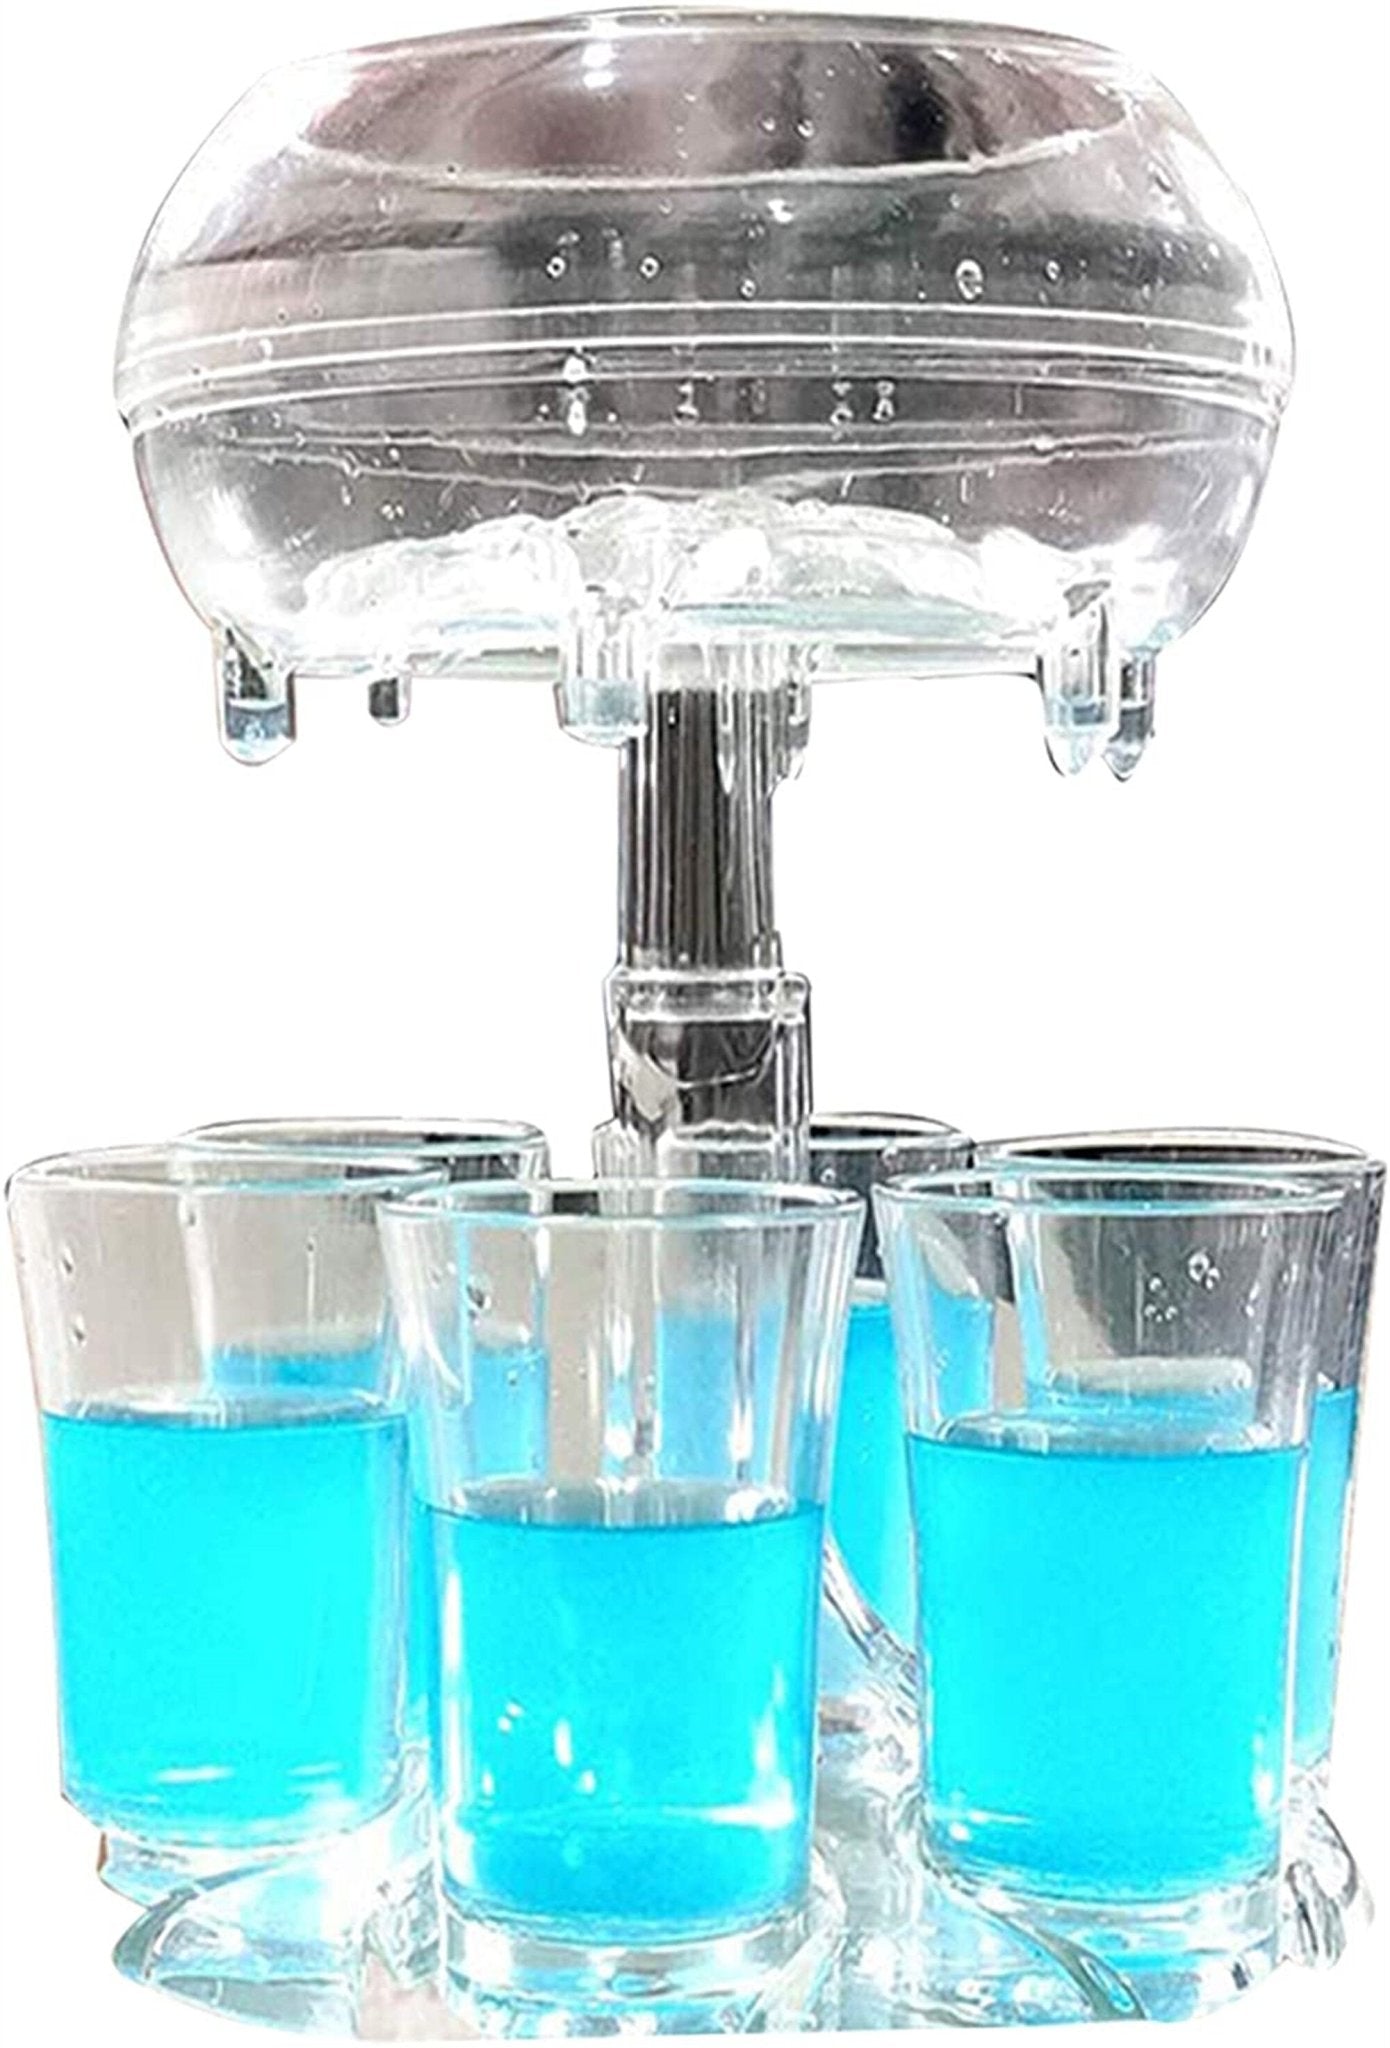 6 Shot Glass Holder and Dispenser Set - Home Essentials Store Retail